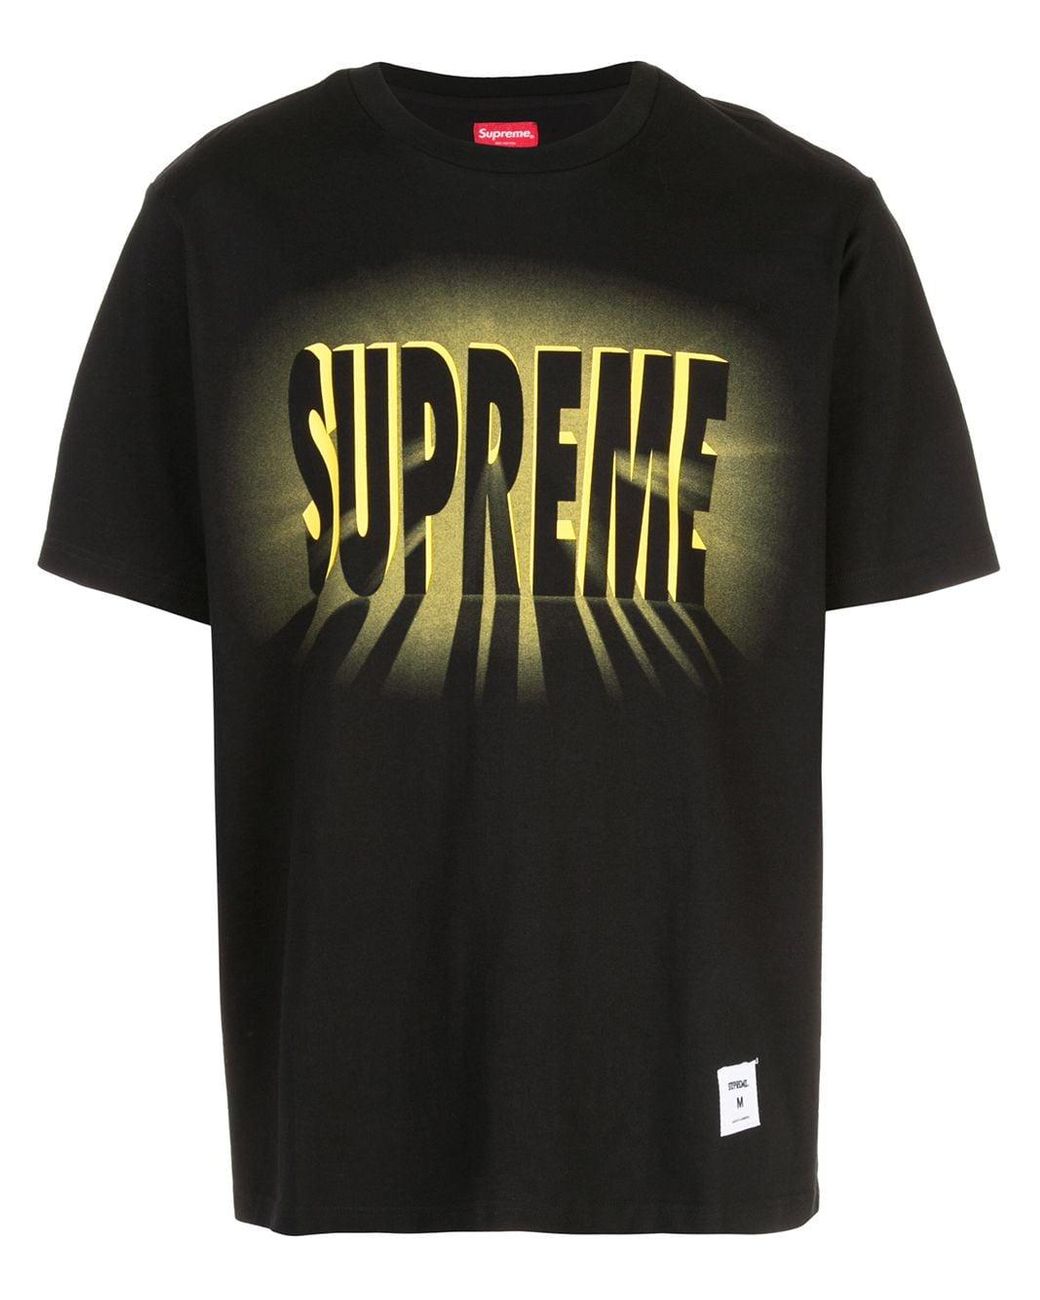 Supreme Cotton Logo T-shirt in Black for Men - Lyst